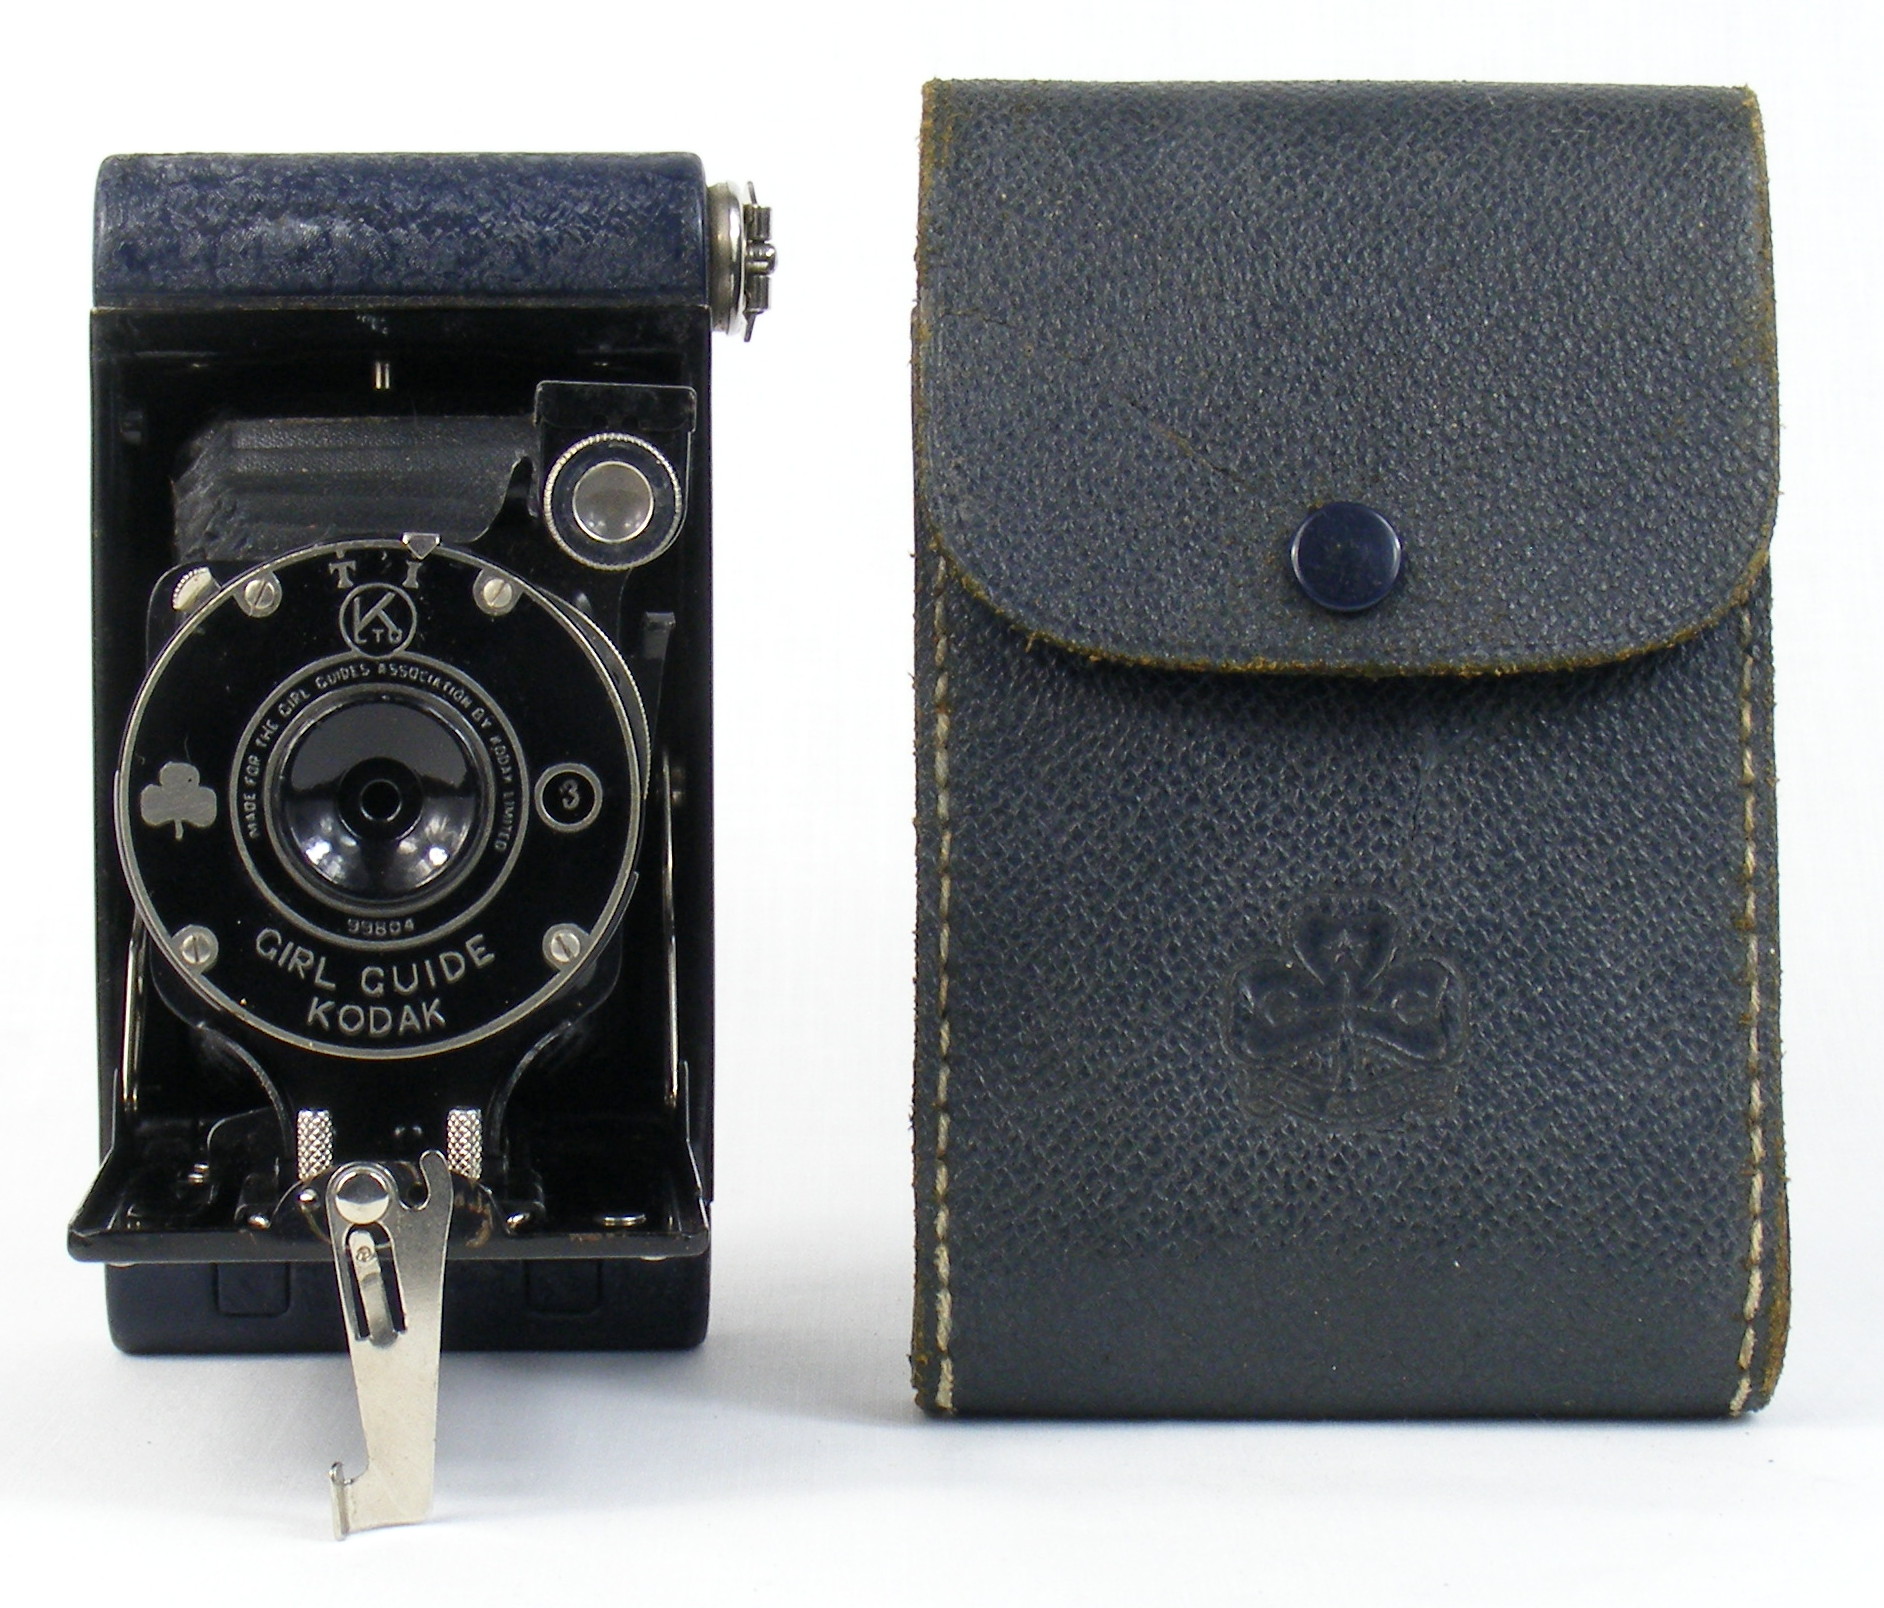 Image of Girl Guide Kodak camera and case (UK version)